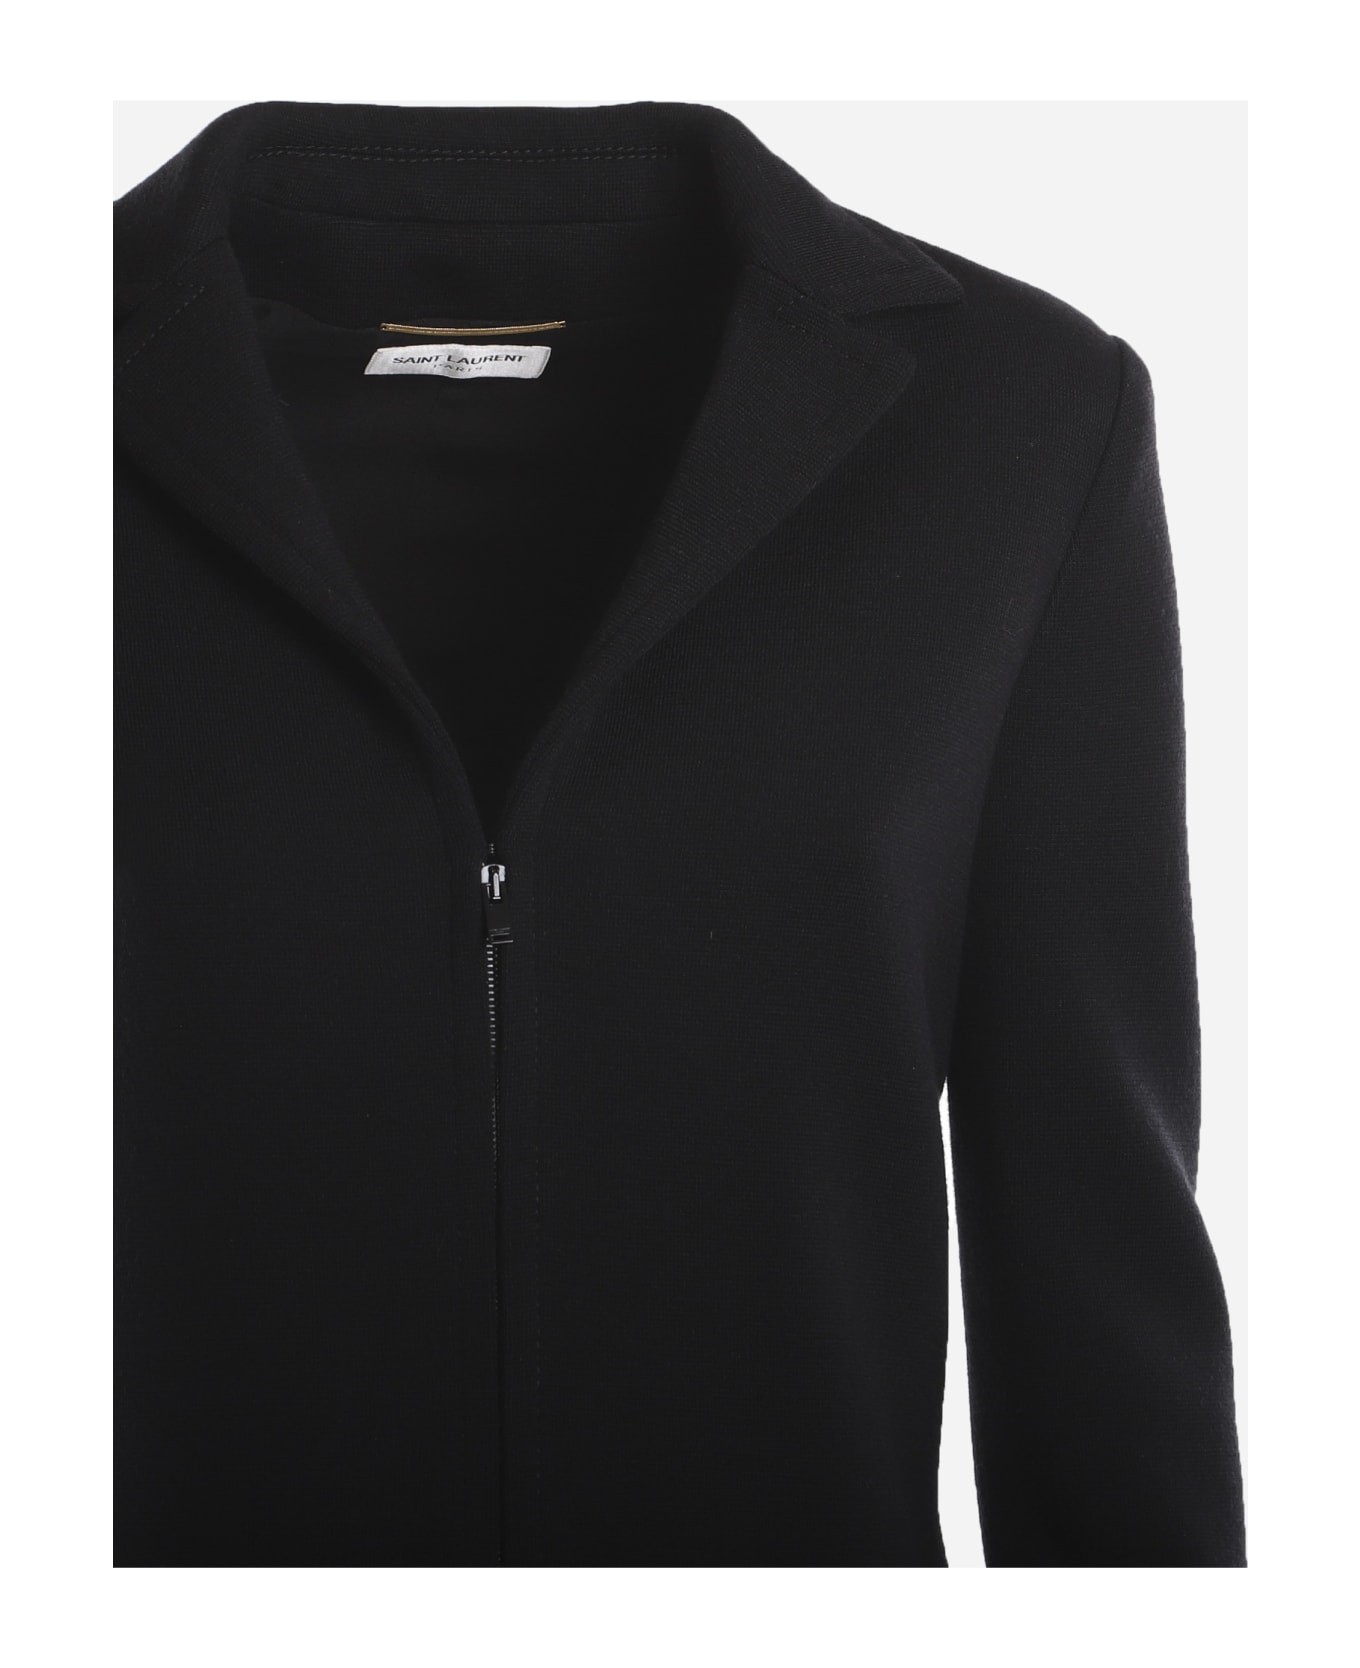 Saint Laurent Suit Made Of Wool Blend - Black